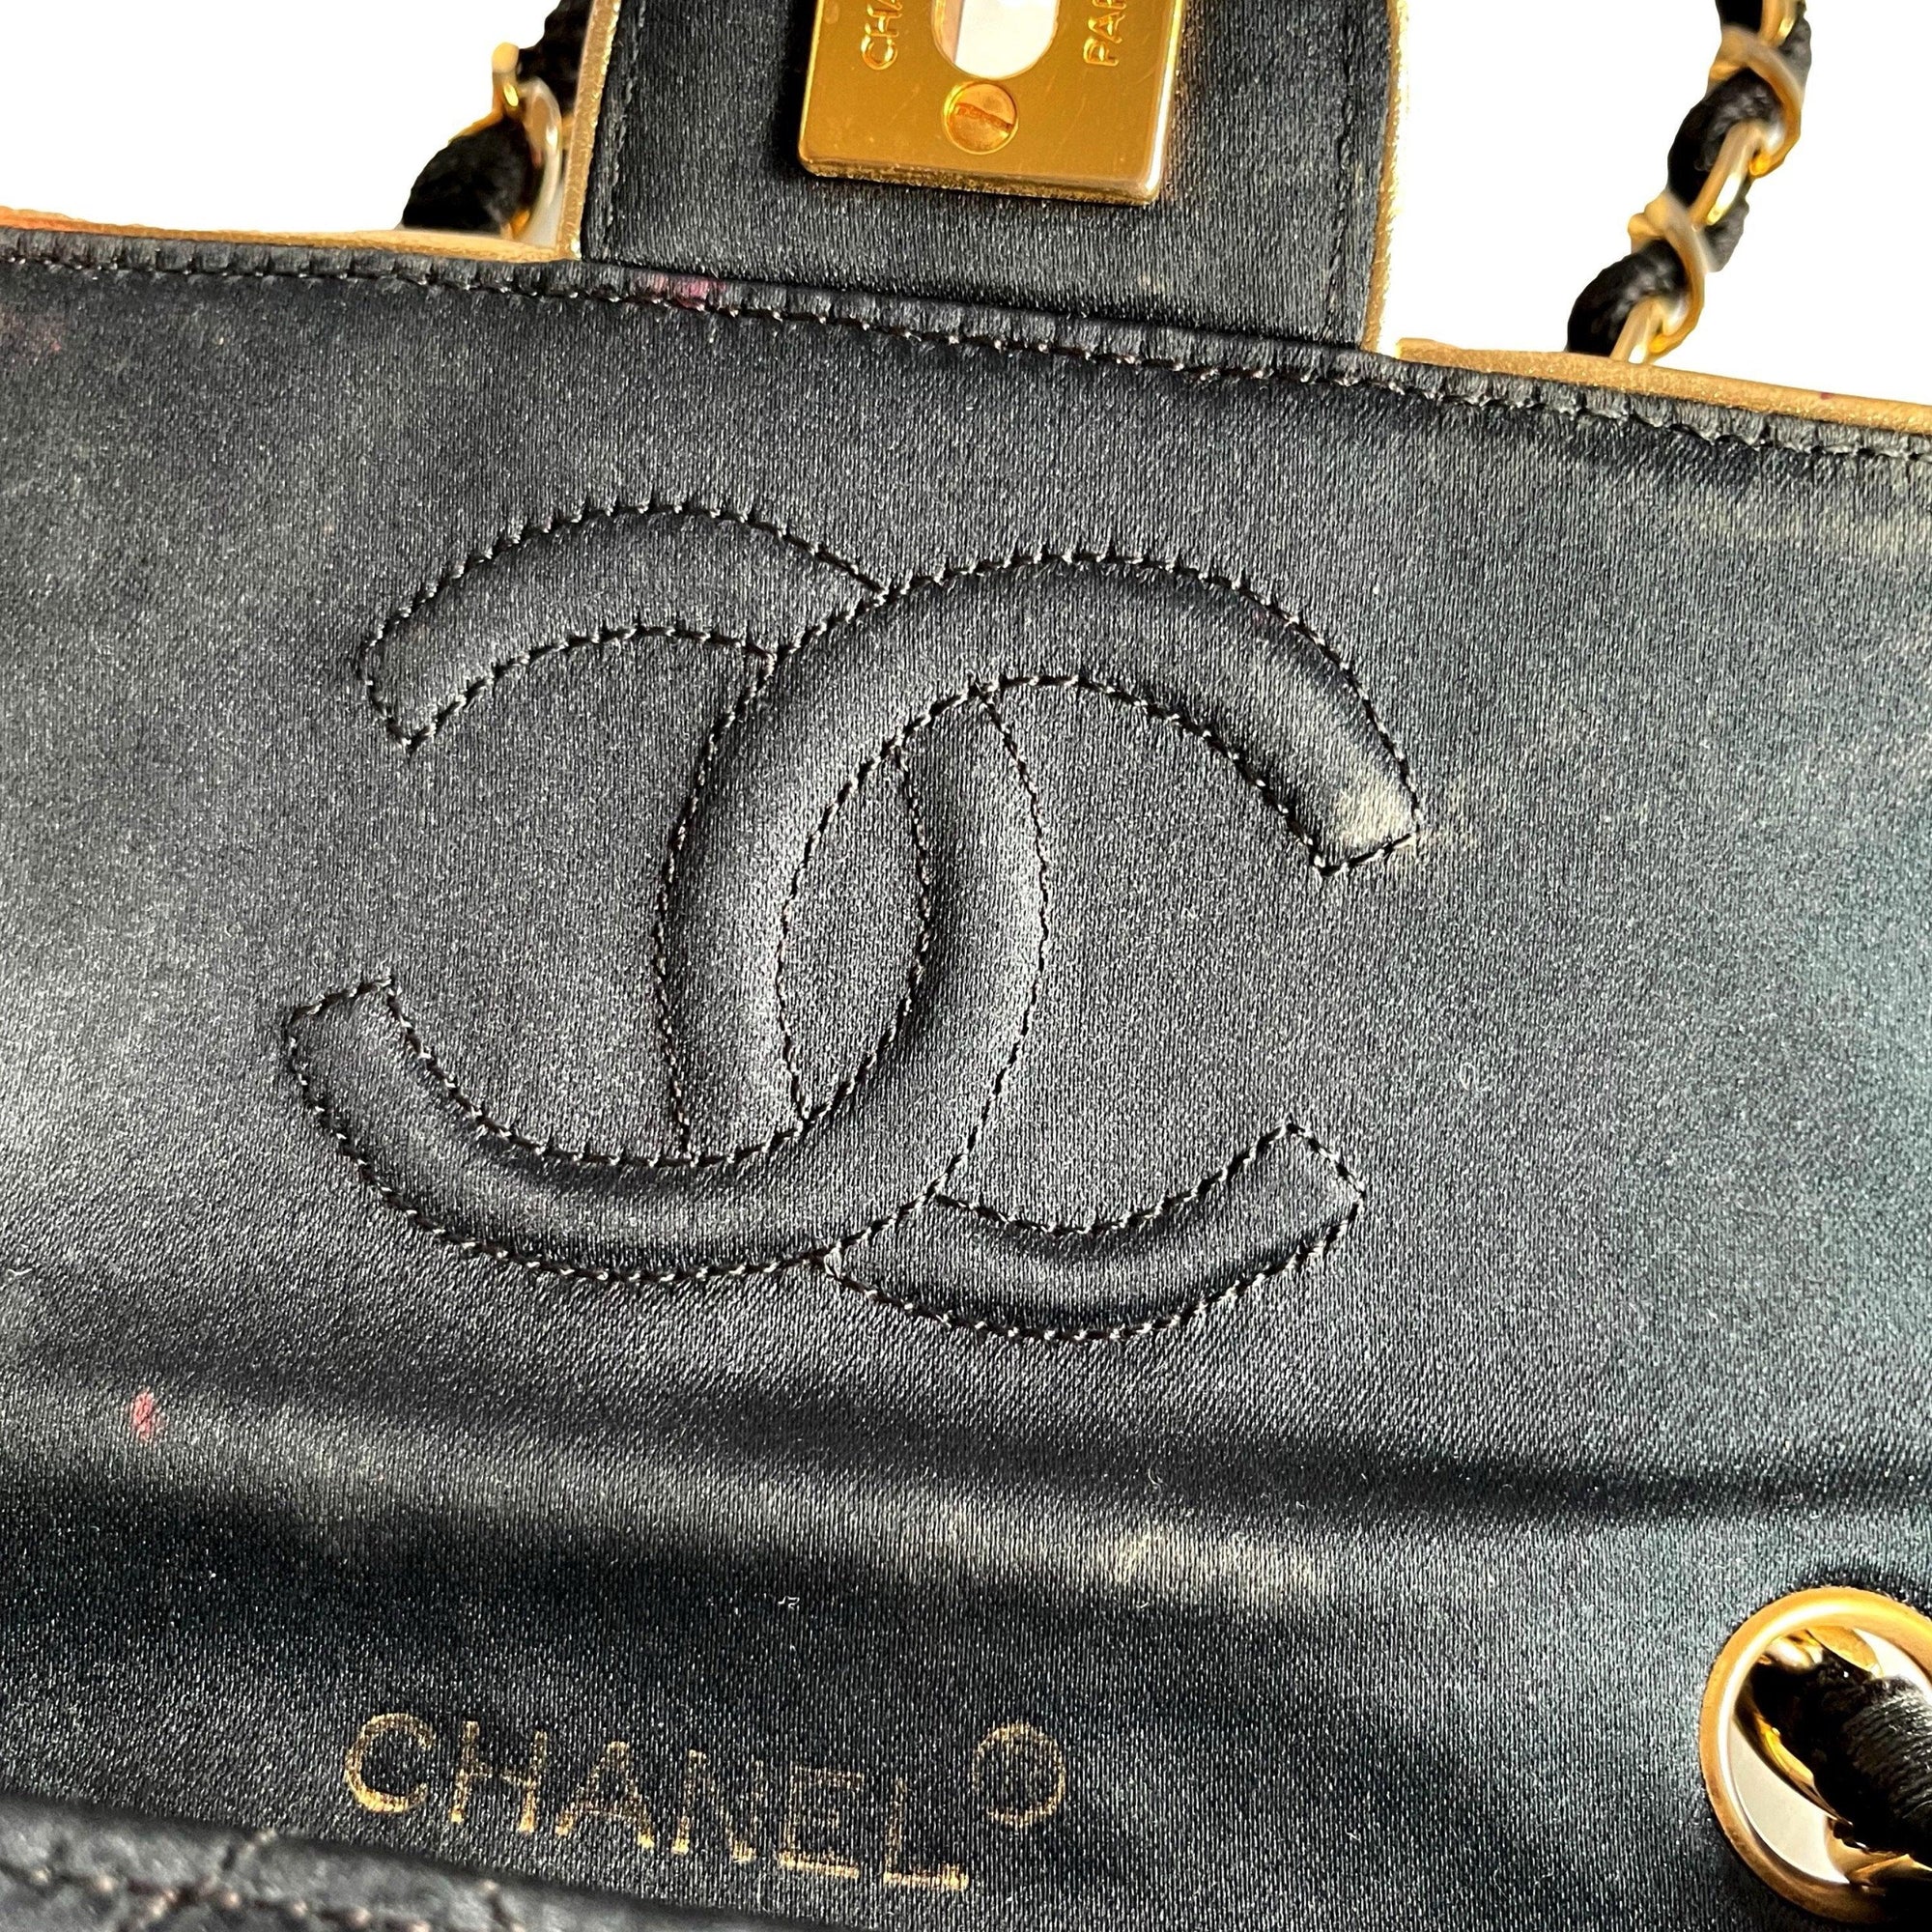 Chanel Black Satin Flap Bag - Handbags